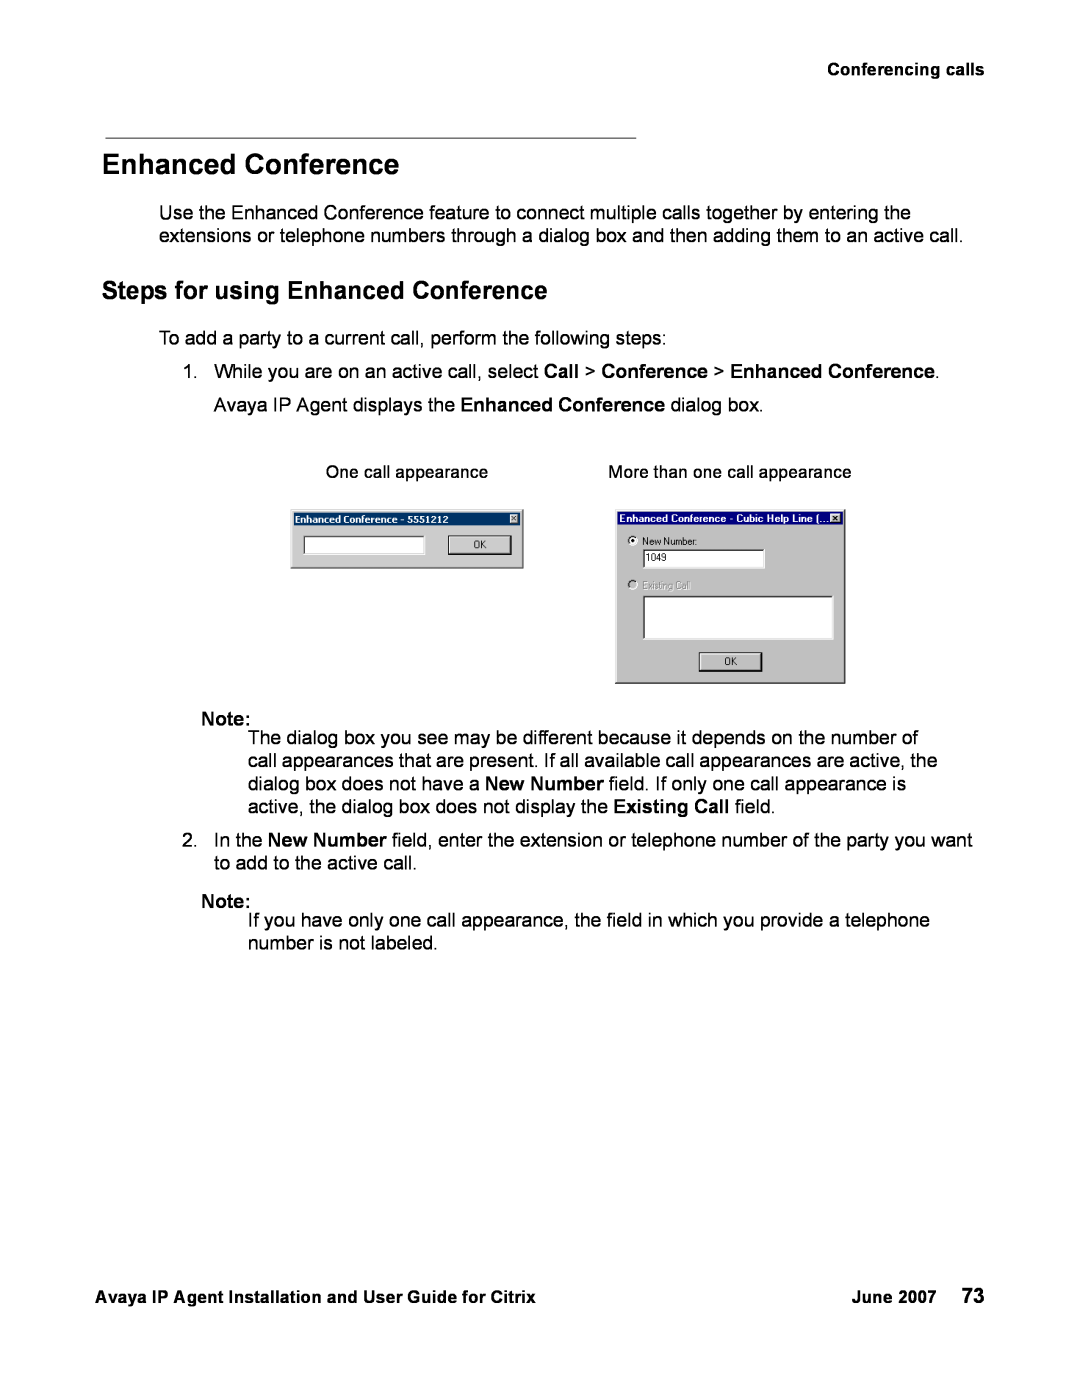 Avaya 7 manual Steps for using Enhanced Conference 